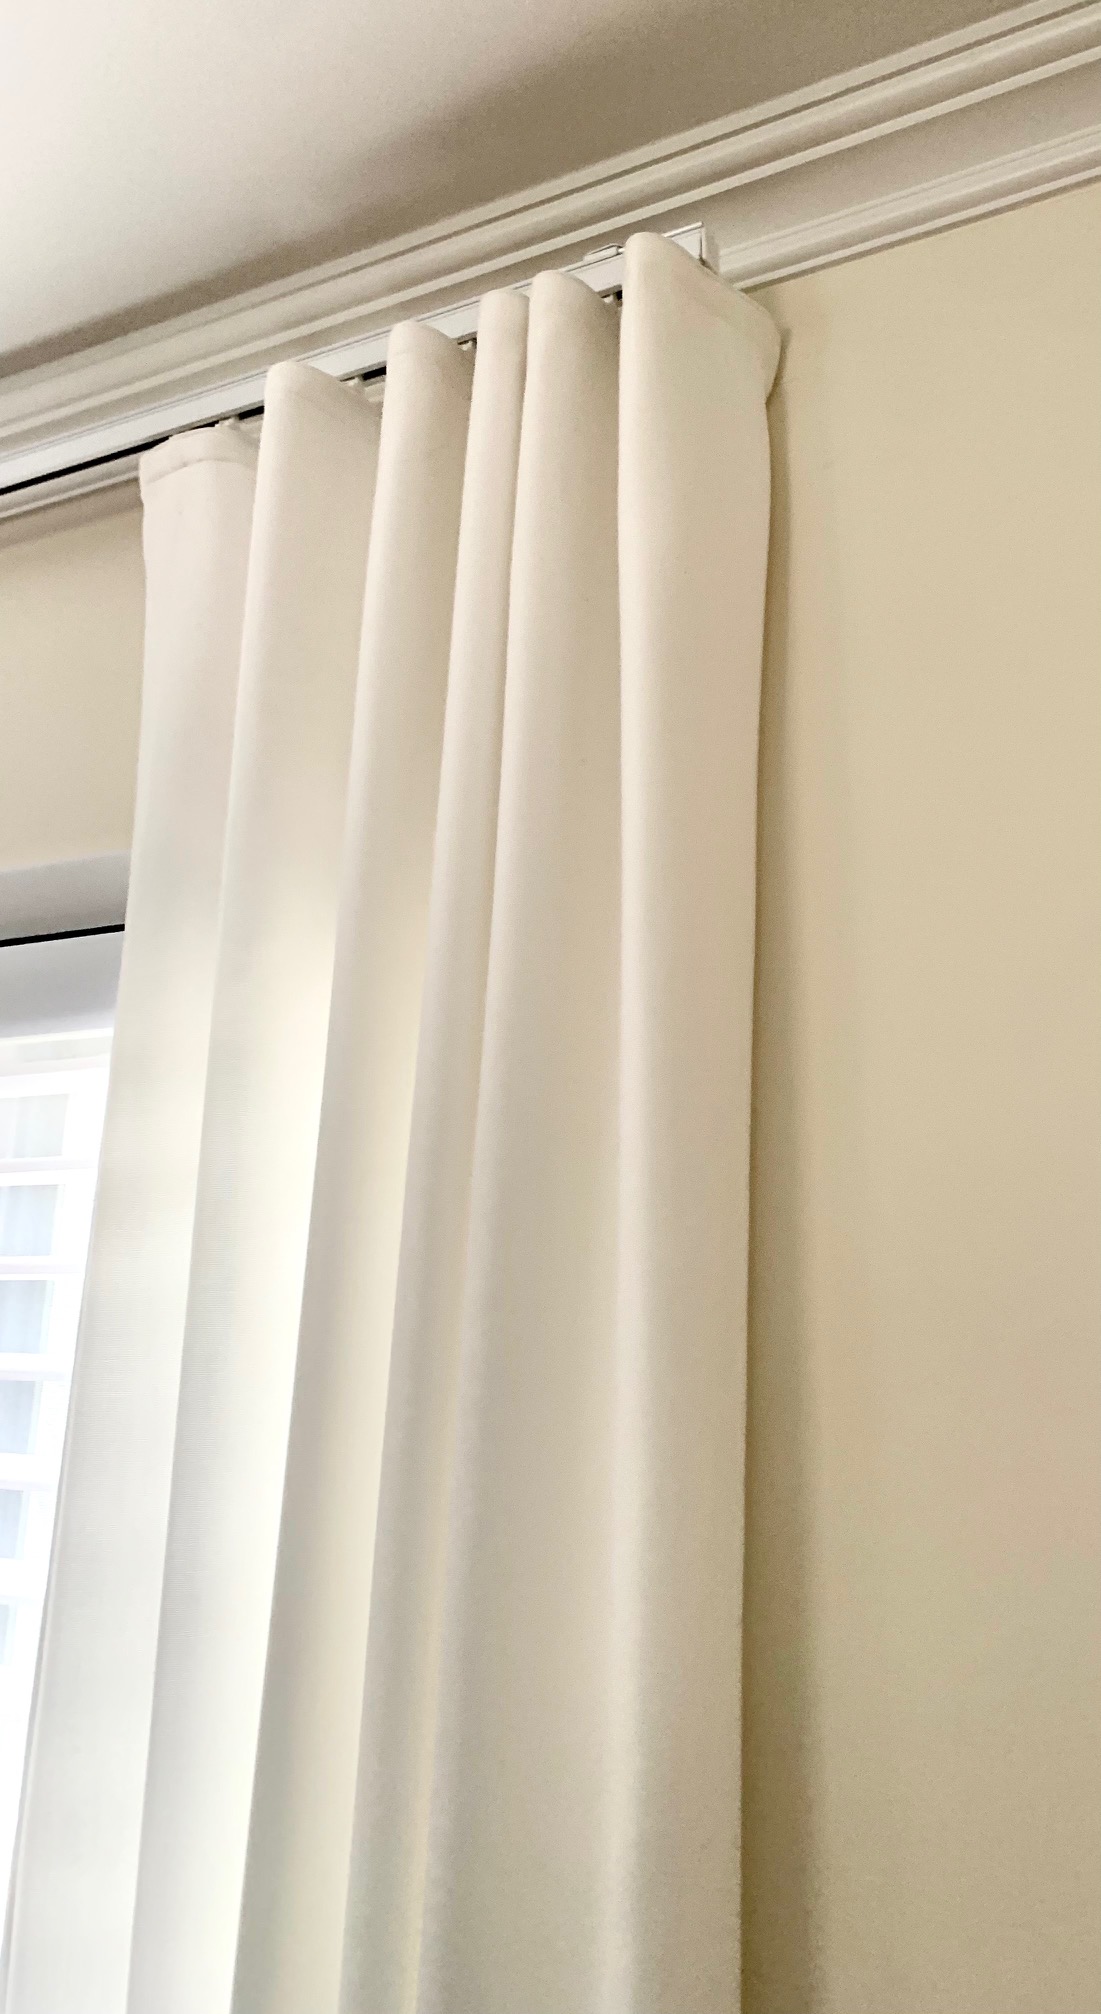 Ripple Fold White Linen Drapery Panels on Kirsch Architrac Hardware in Master Bedroom